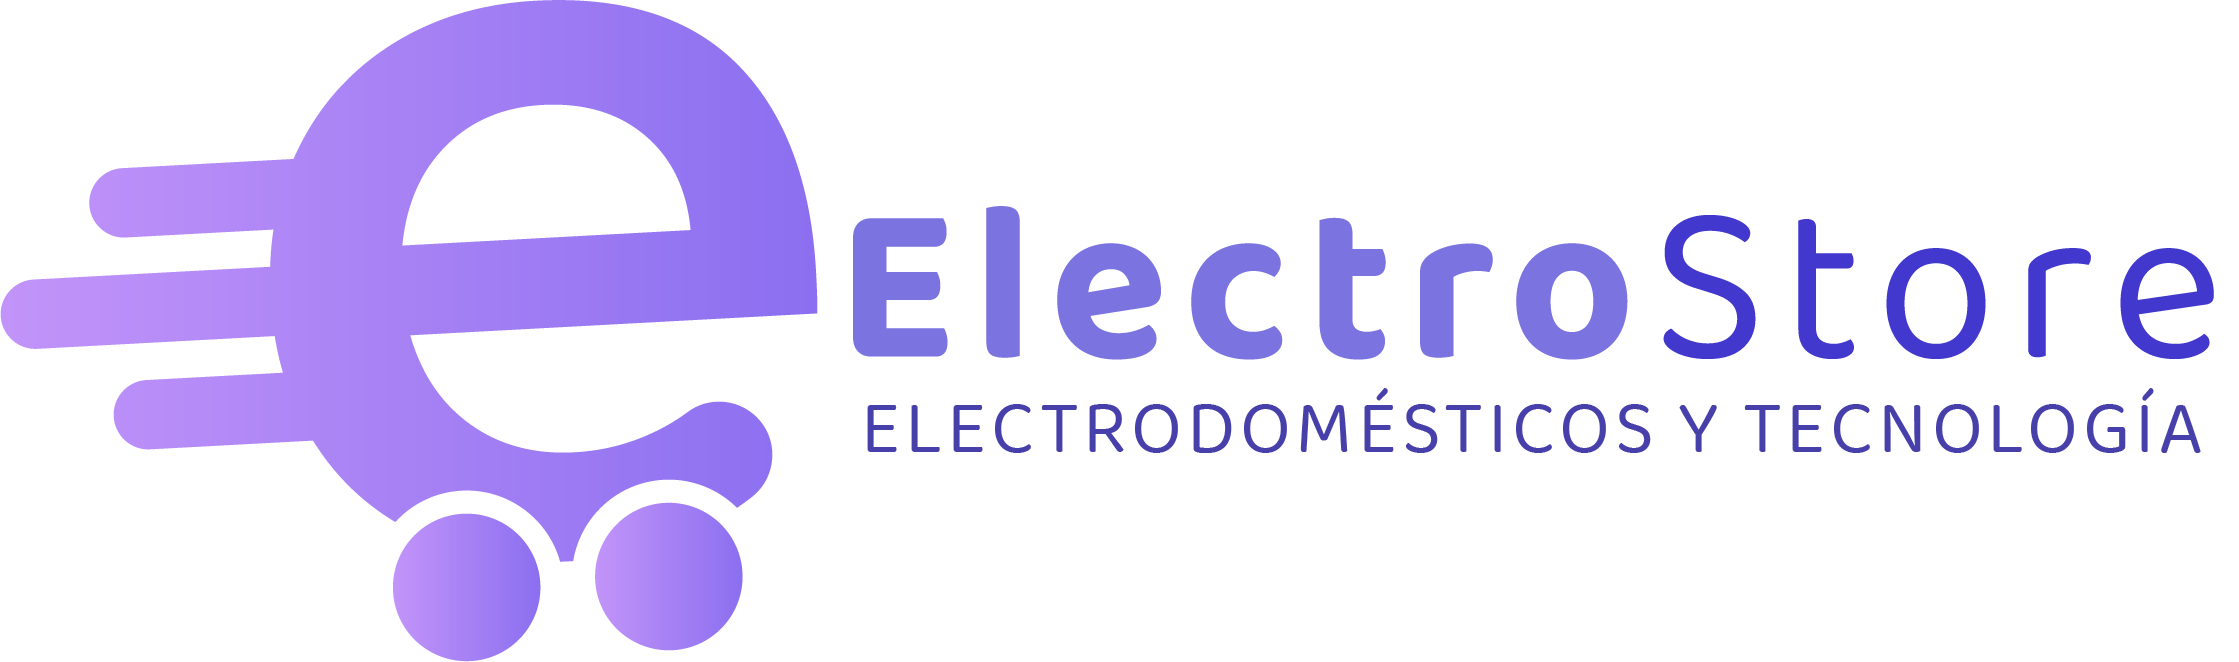 ElectroStore – Celulares, hogar y técnología